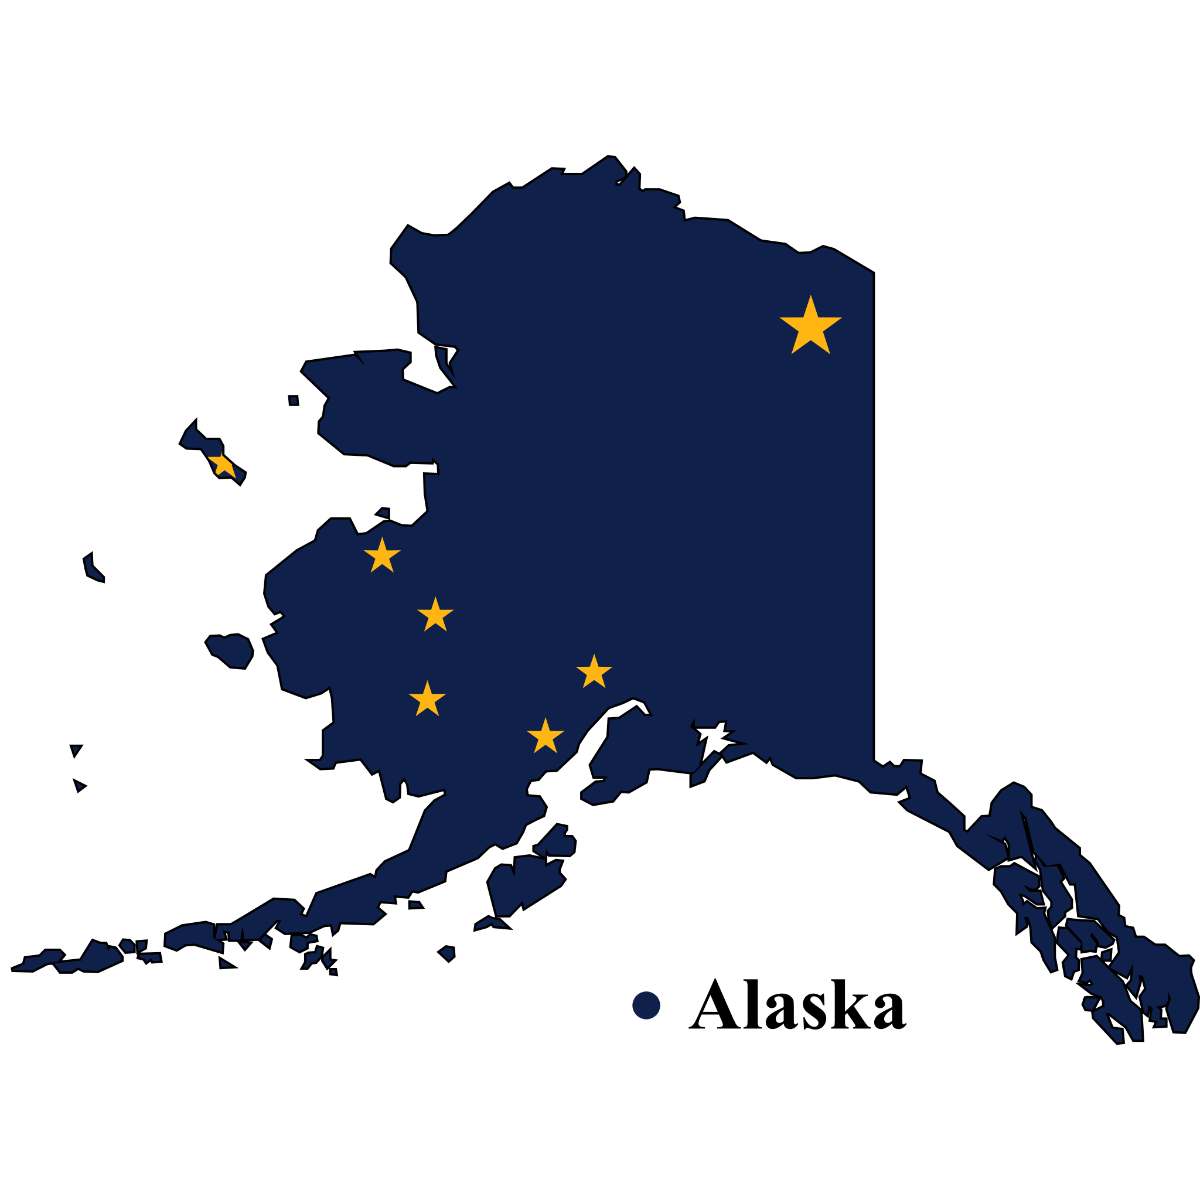 Alaska State map cutout with Alaska flag superimposed